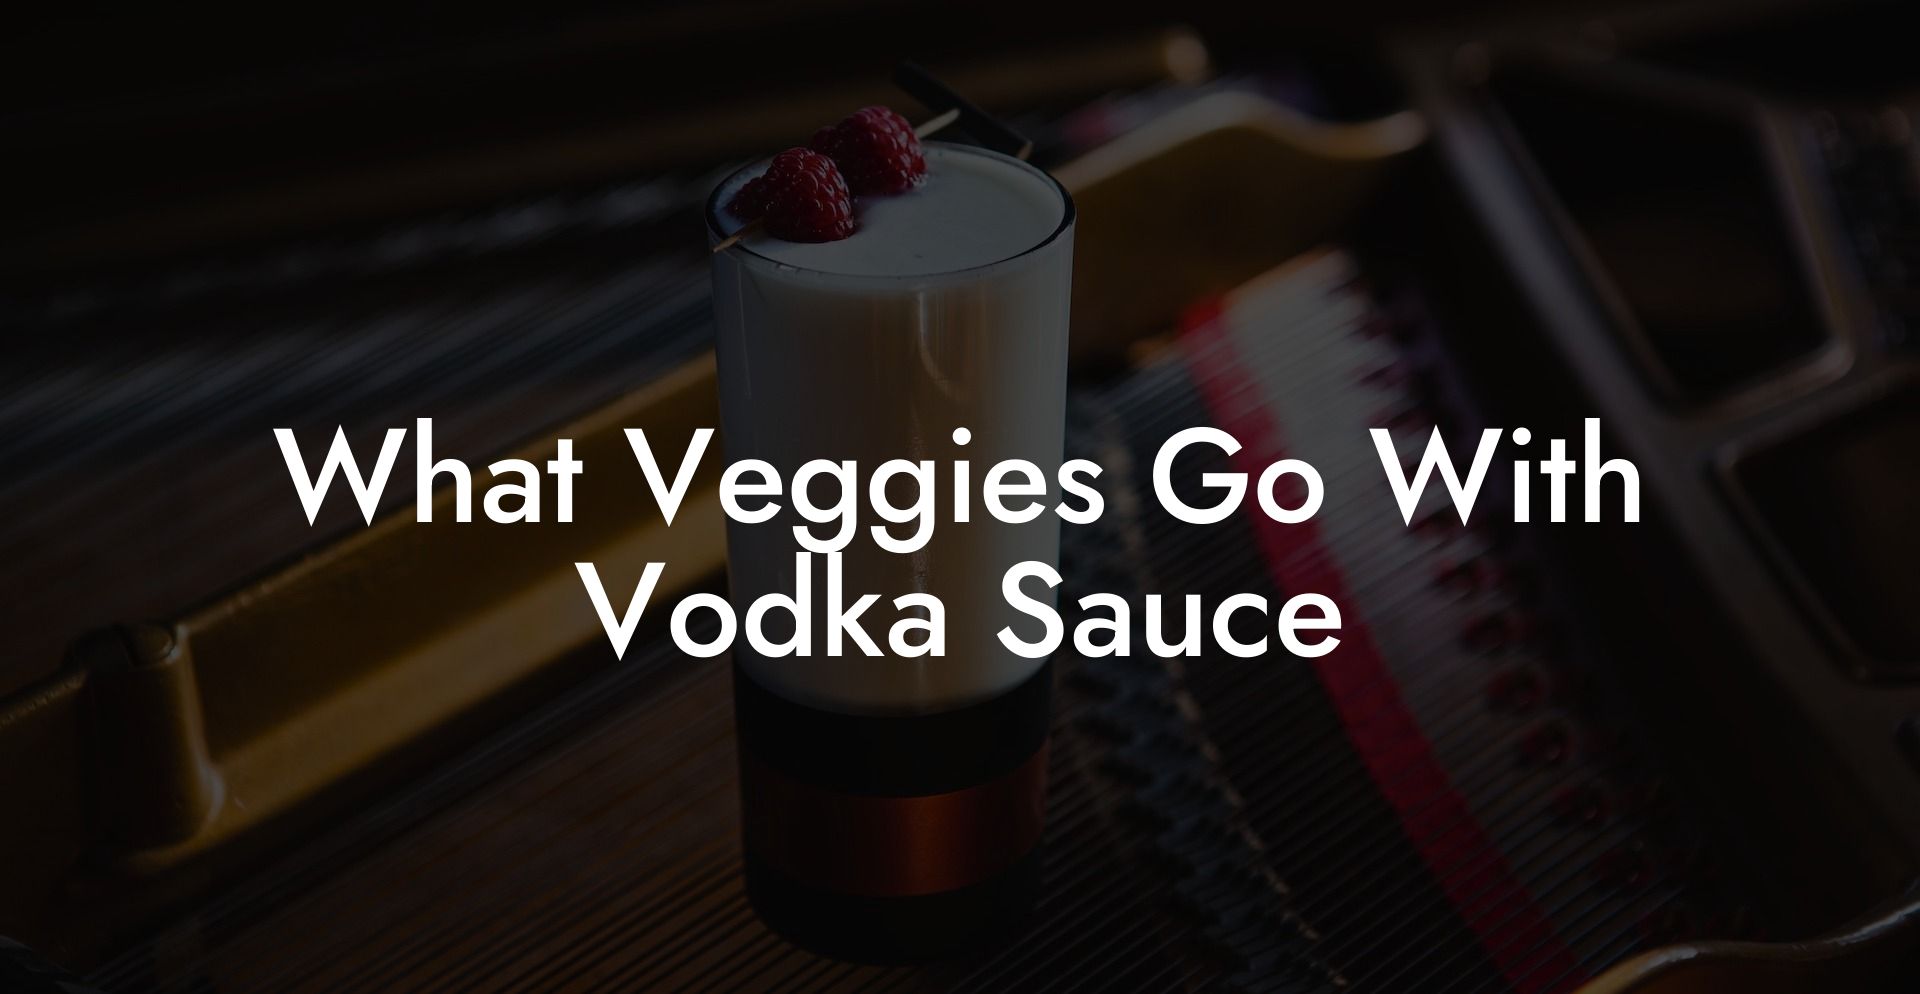 What Veggies Go With Vodka Sauce